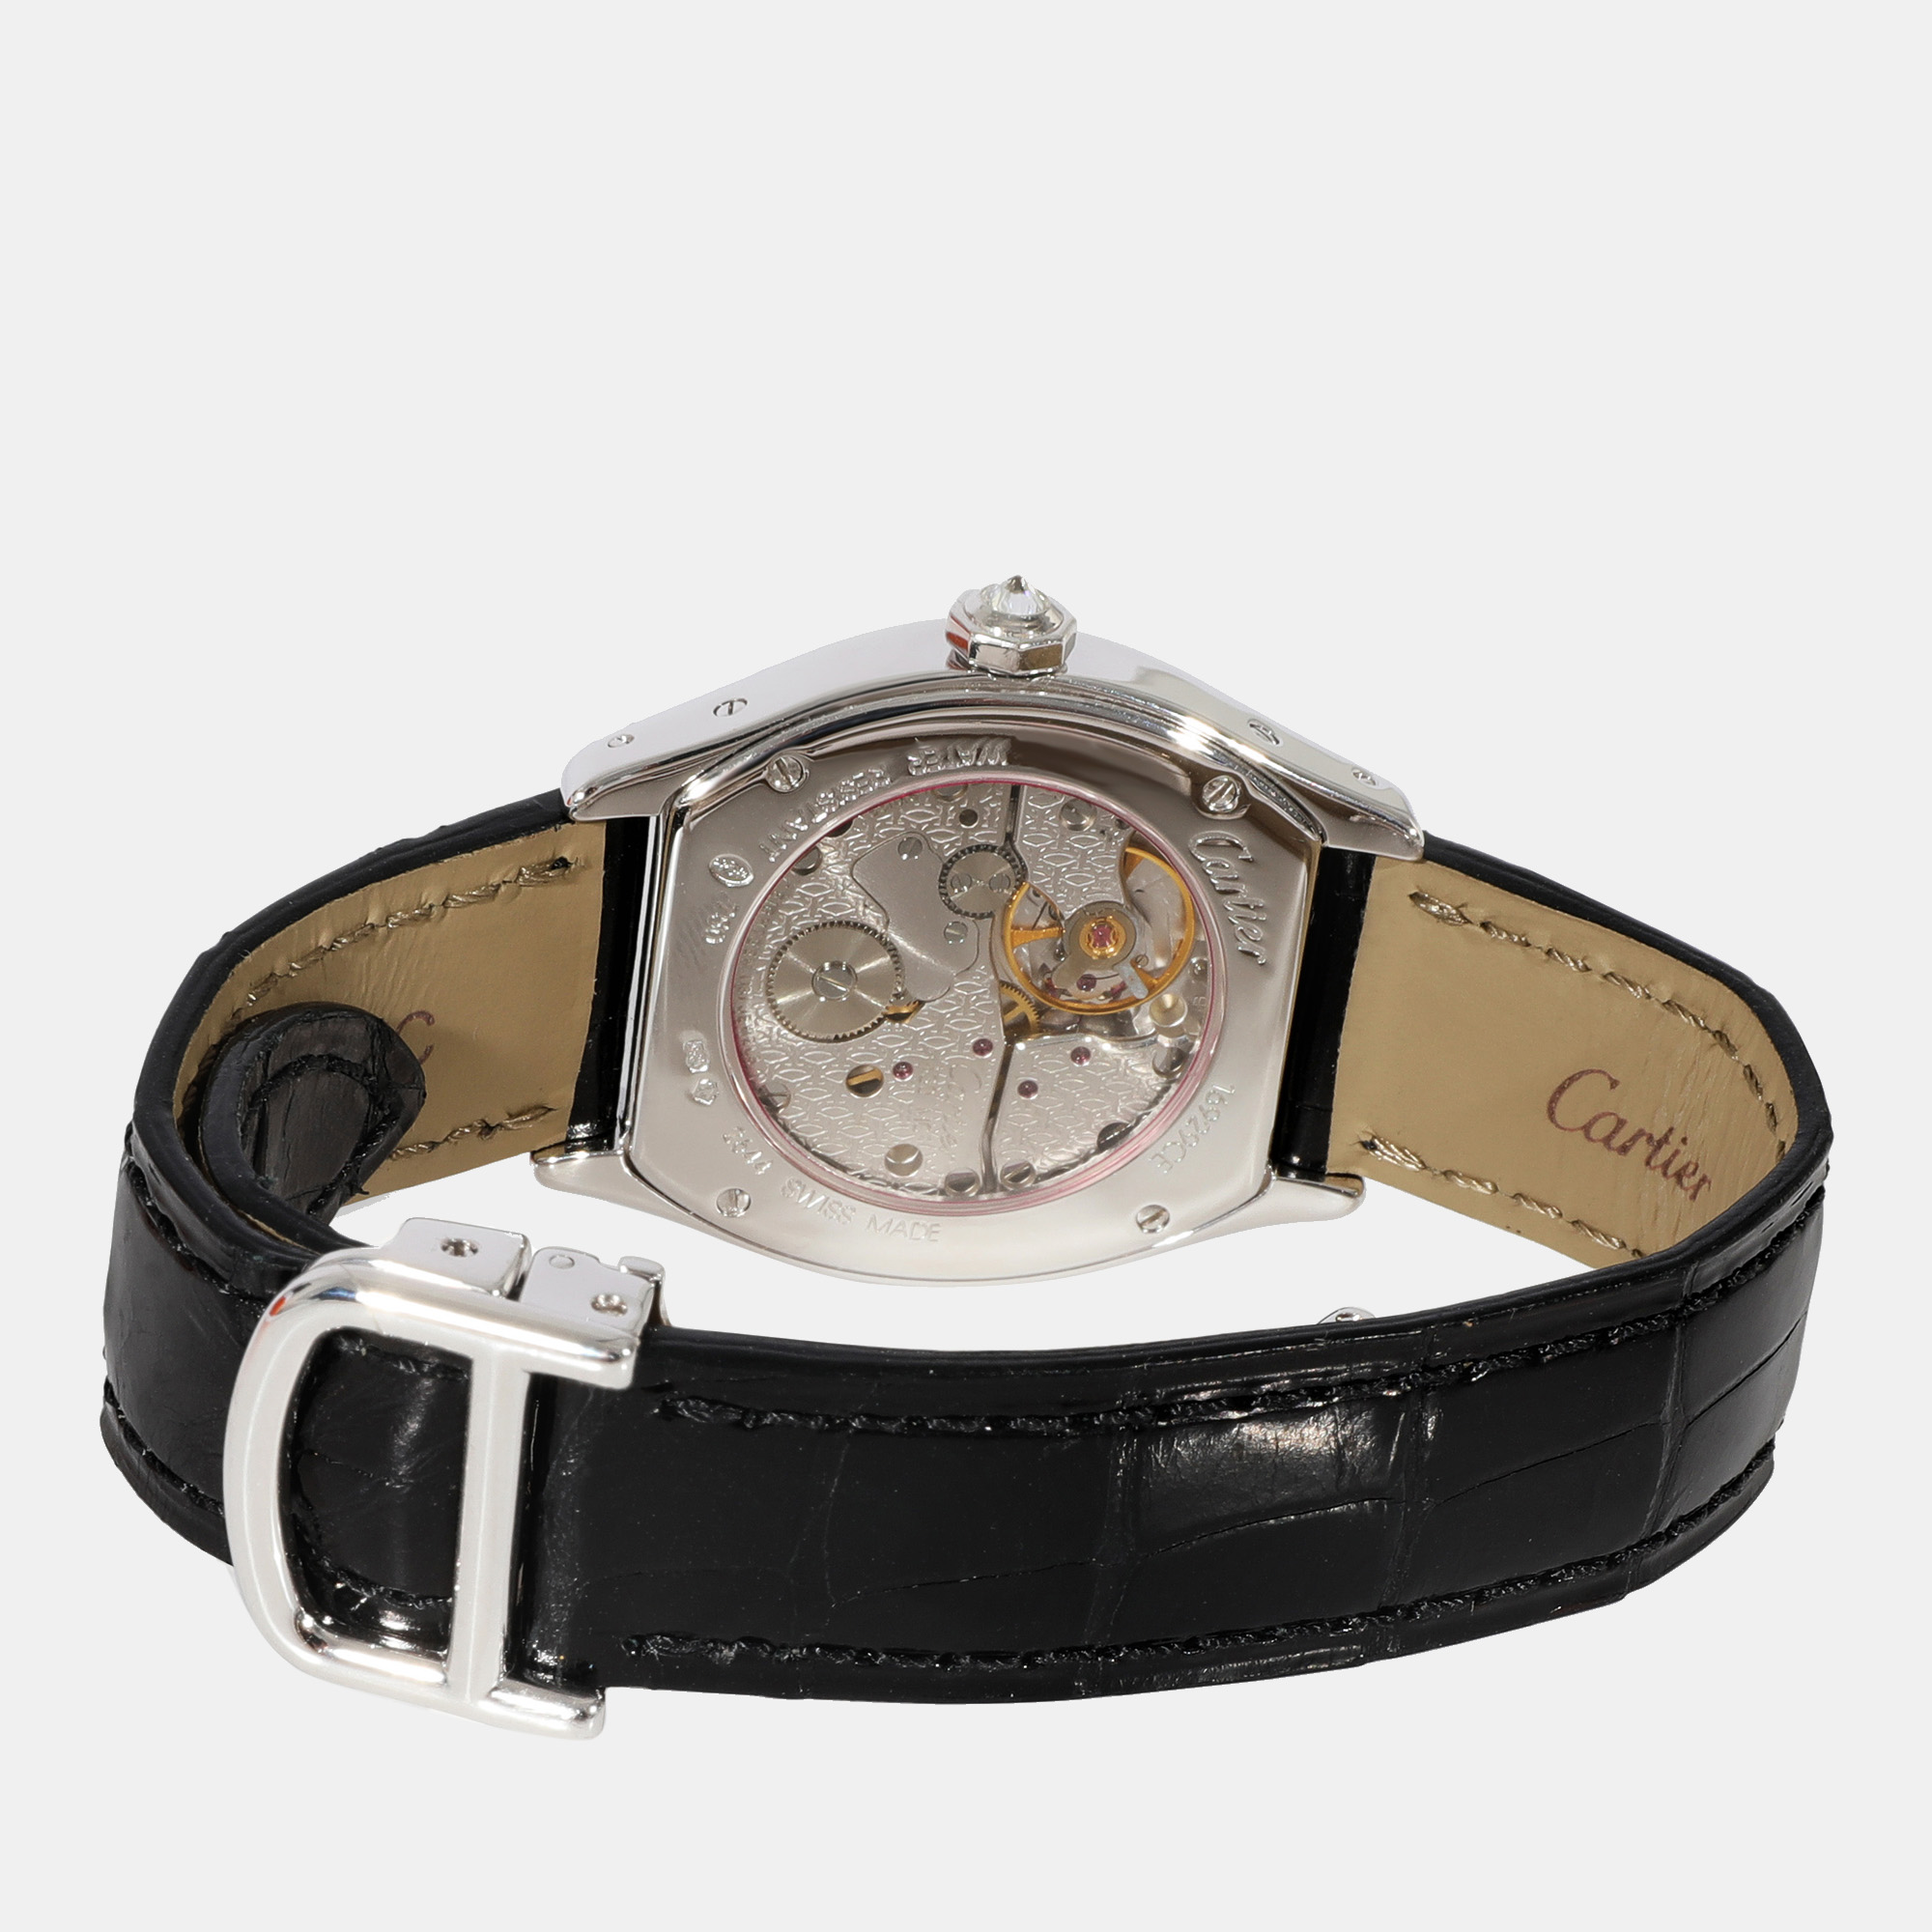 Cartier Tortue 2644 Women's Watch In 18kt White Gold